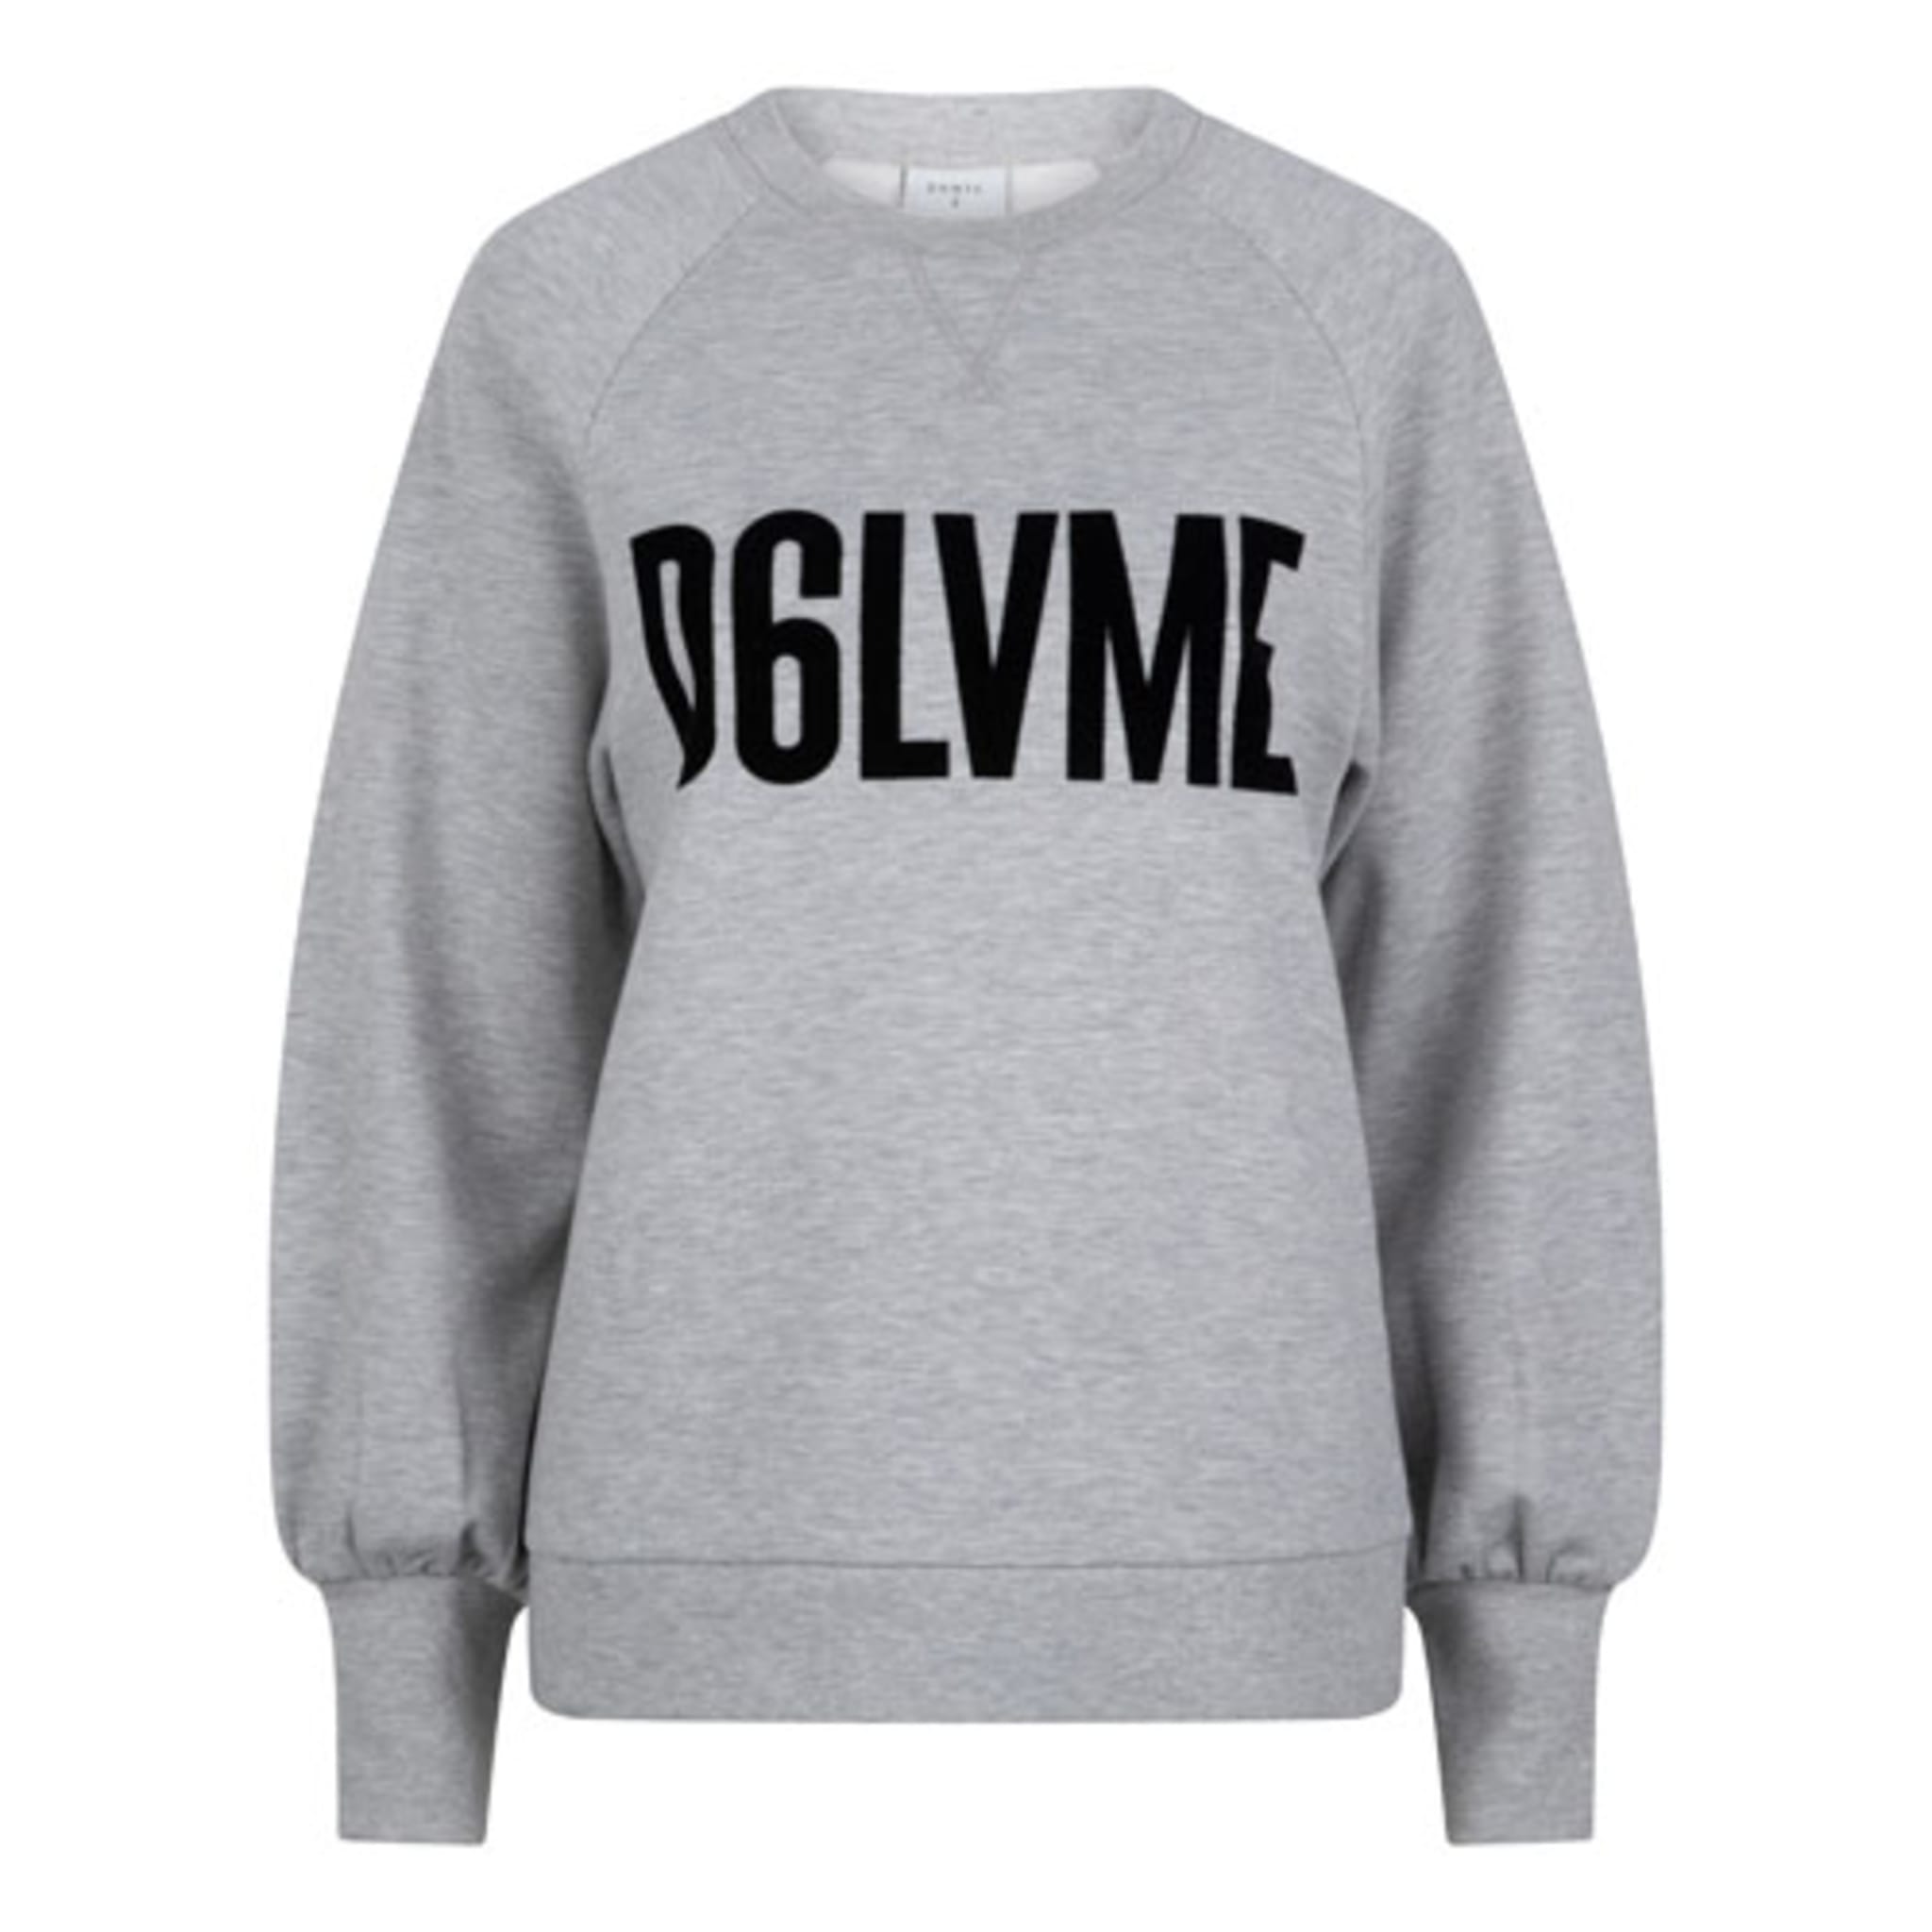 Loveme Colourblock Sweater, heather grey